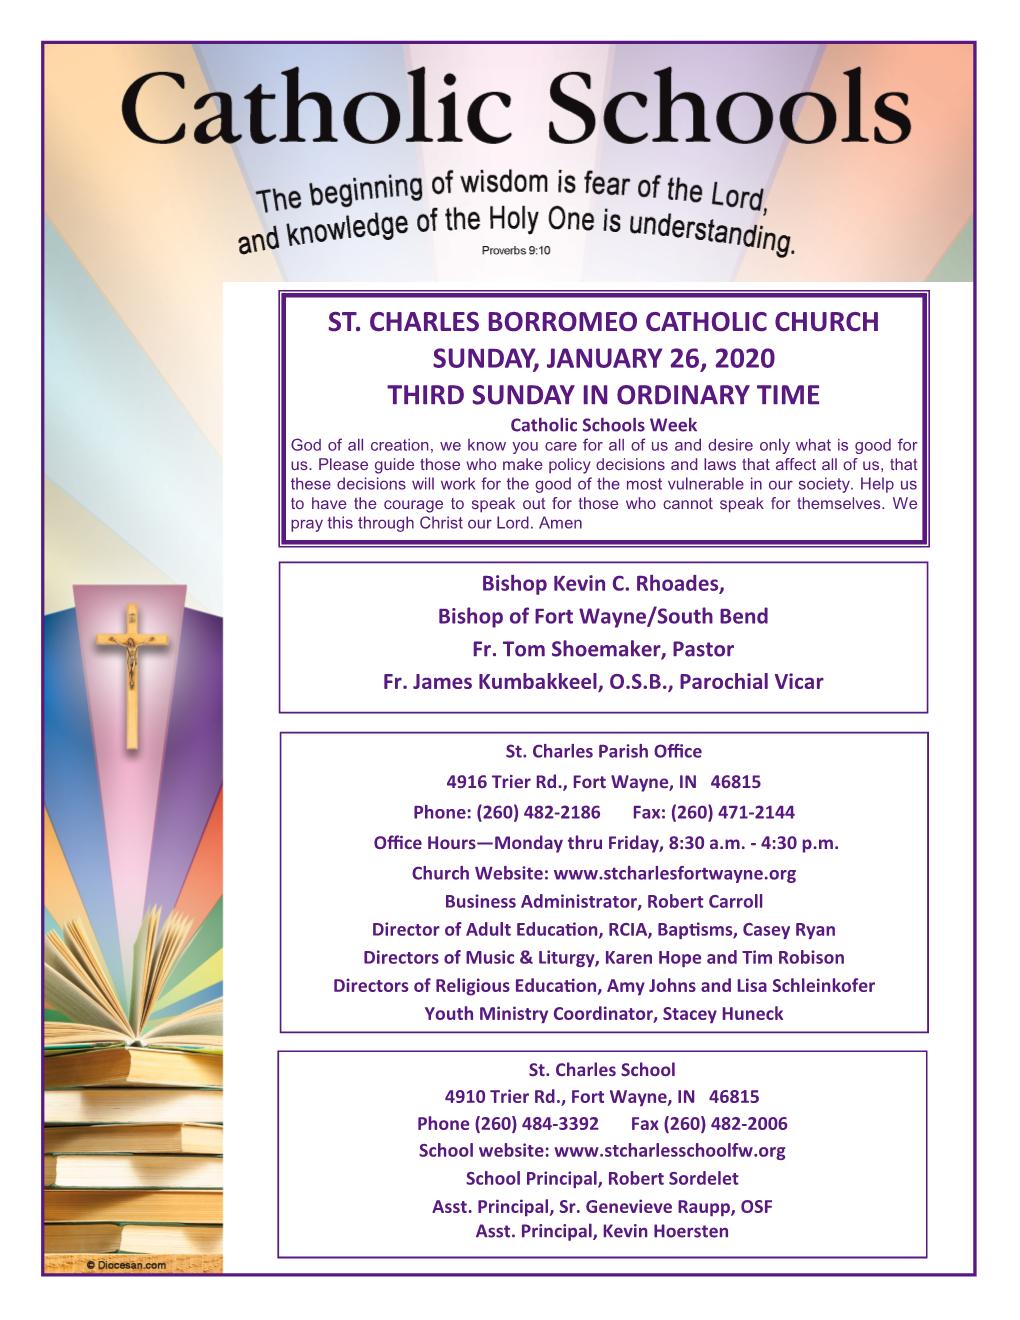 St. Charles Borromeo Catholic Church Sunday, January 26, 2020 Third